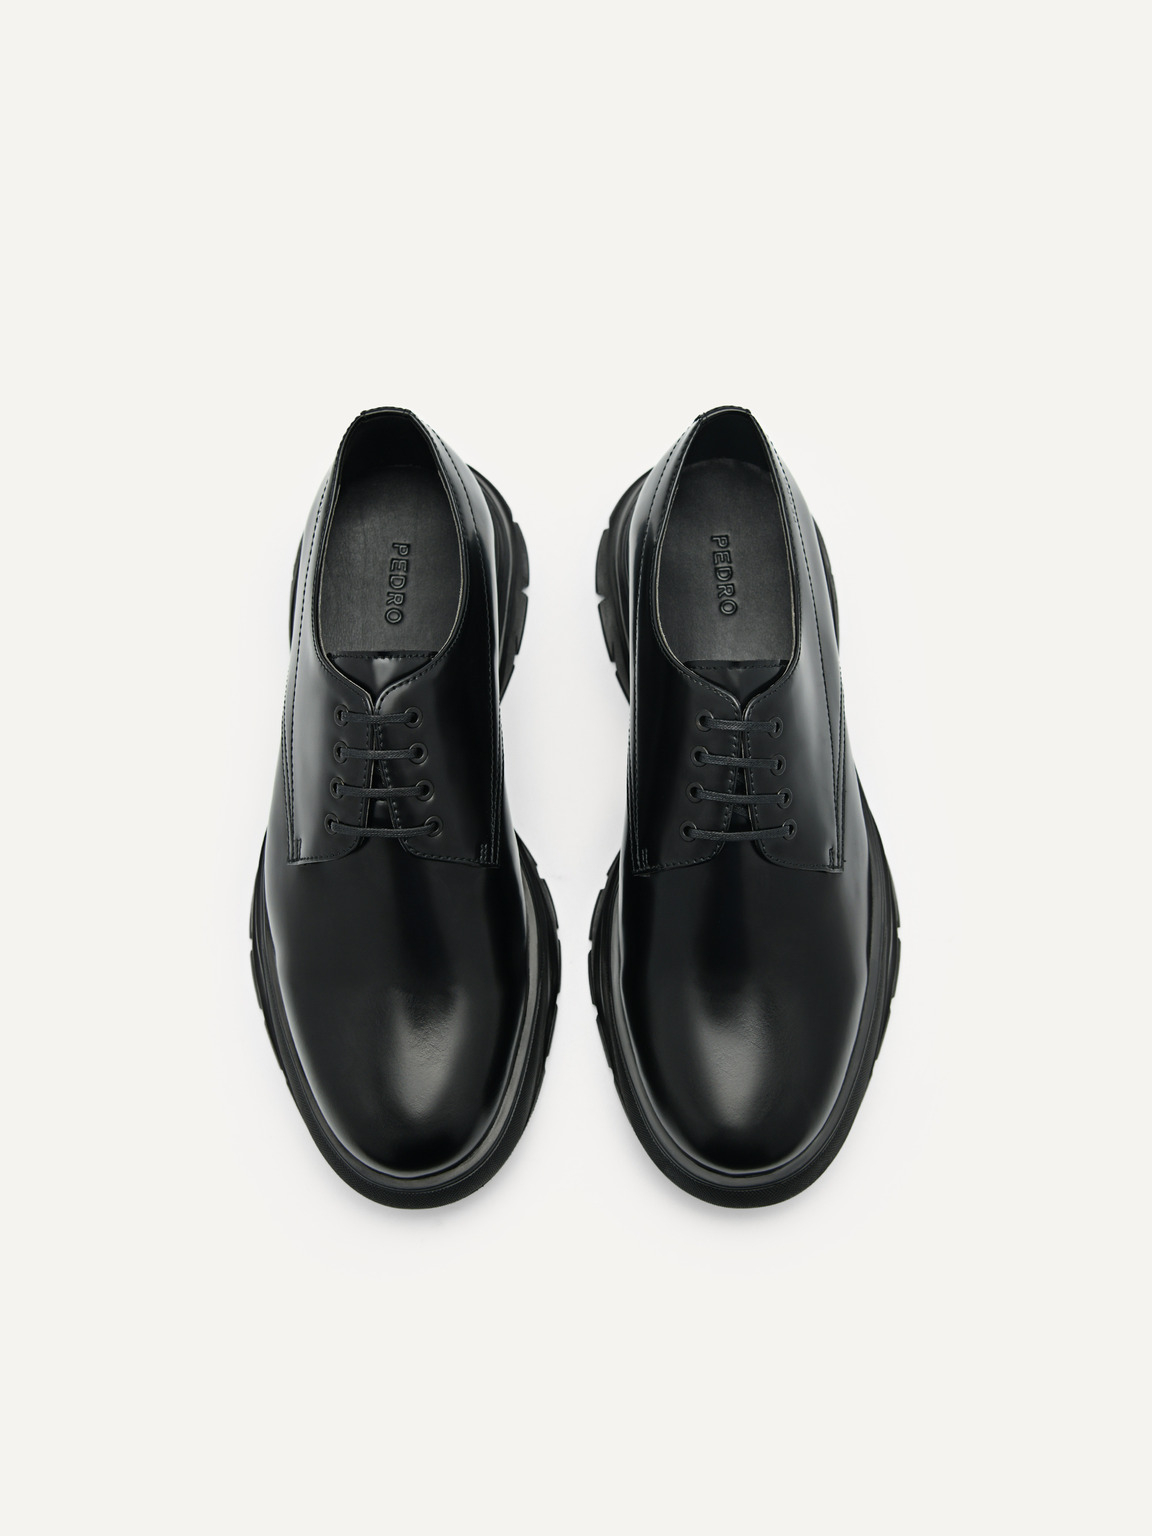 Hybrix Leather Derby Shoes, Black